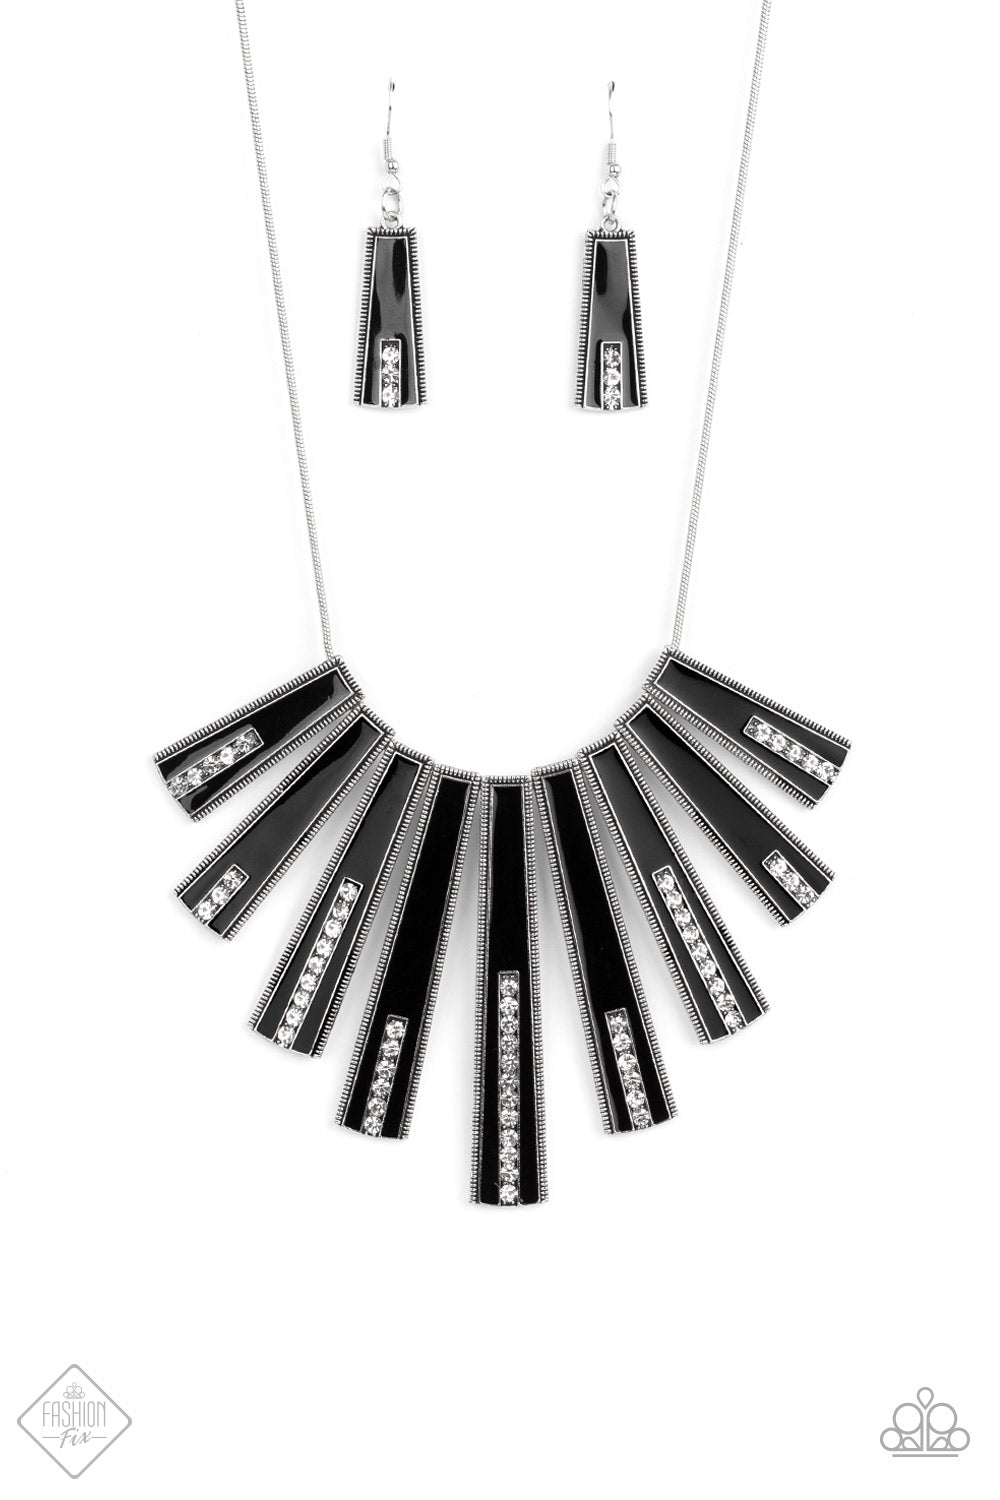 Paparazzi FAN-tastically Deco Black Short Necklace - Fashion Fix Fiercely 5th Avenue September 2021